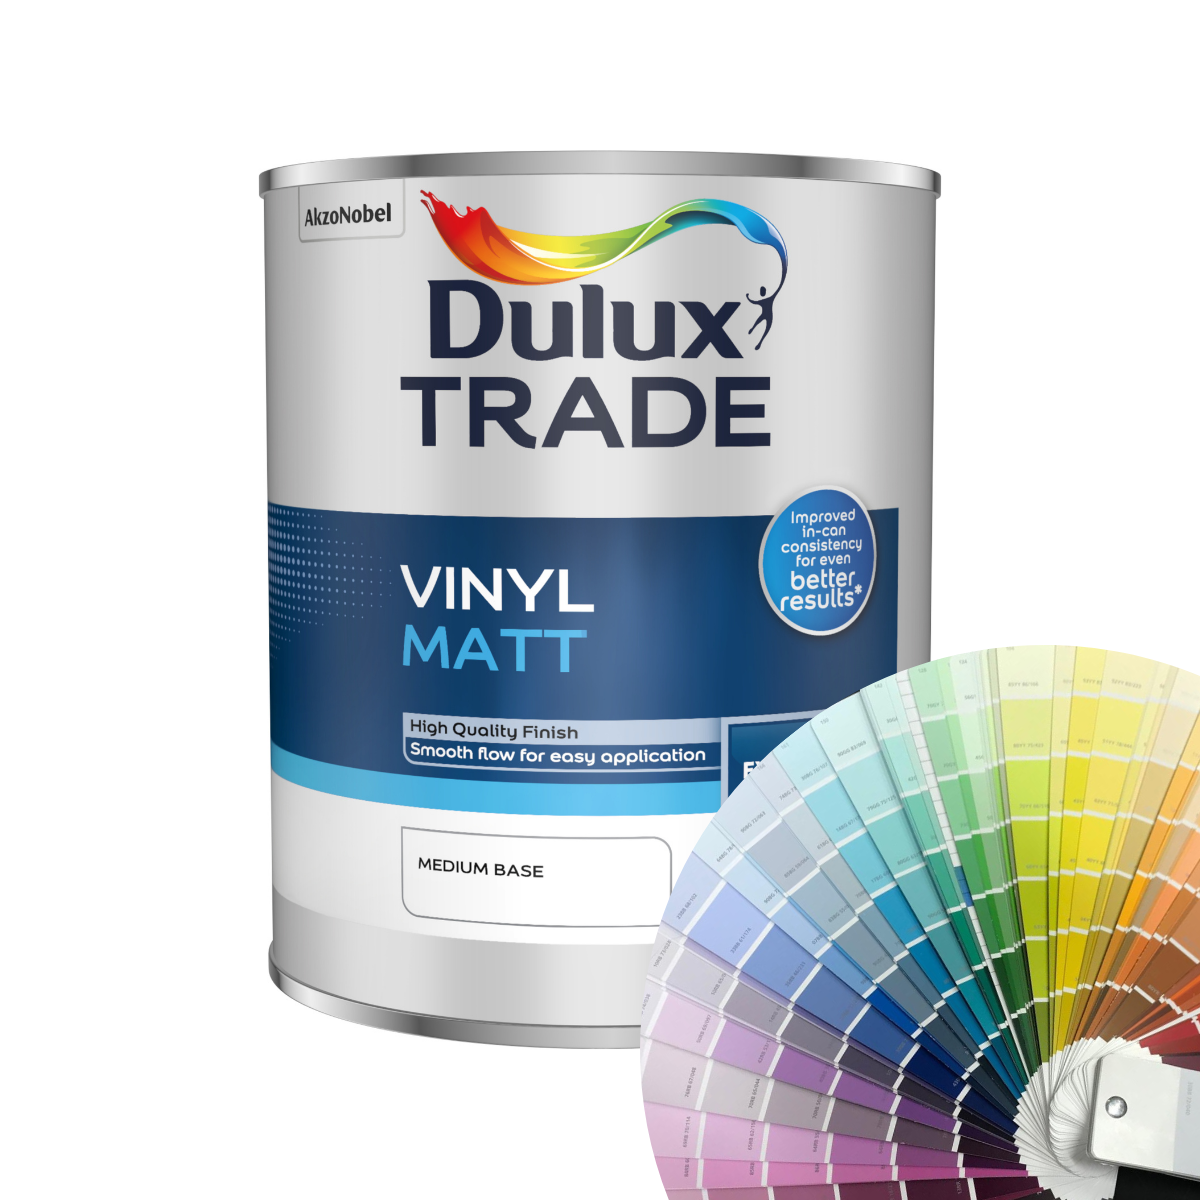 Dulux Trade Vinyl Matt - Tinted Colour